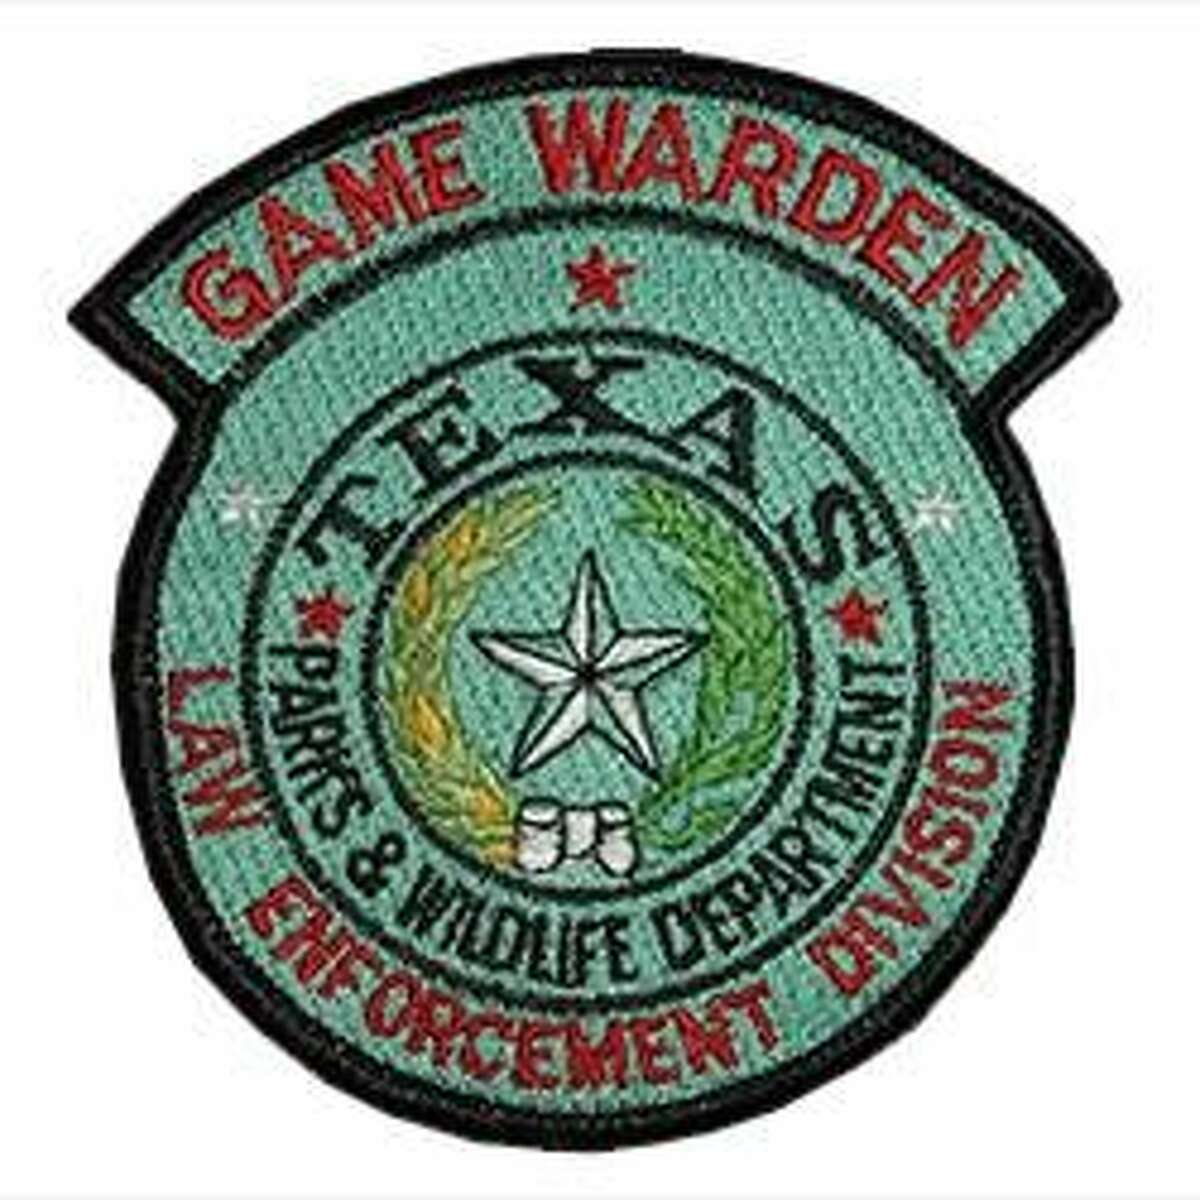 Applications open for Texas Game Warden cadet class